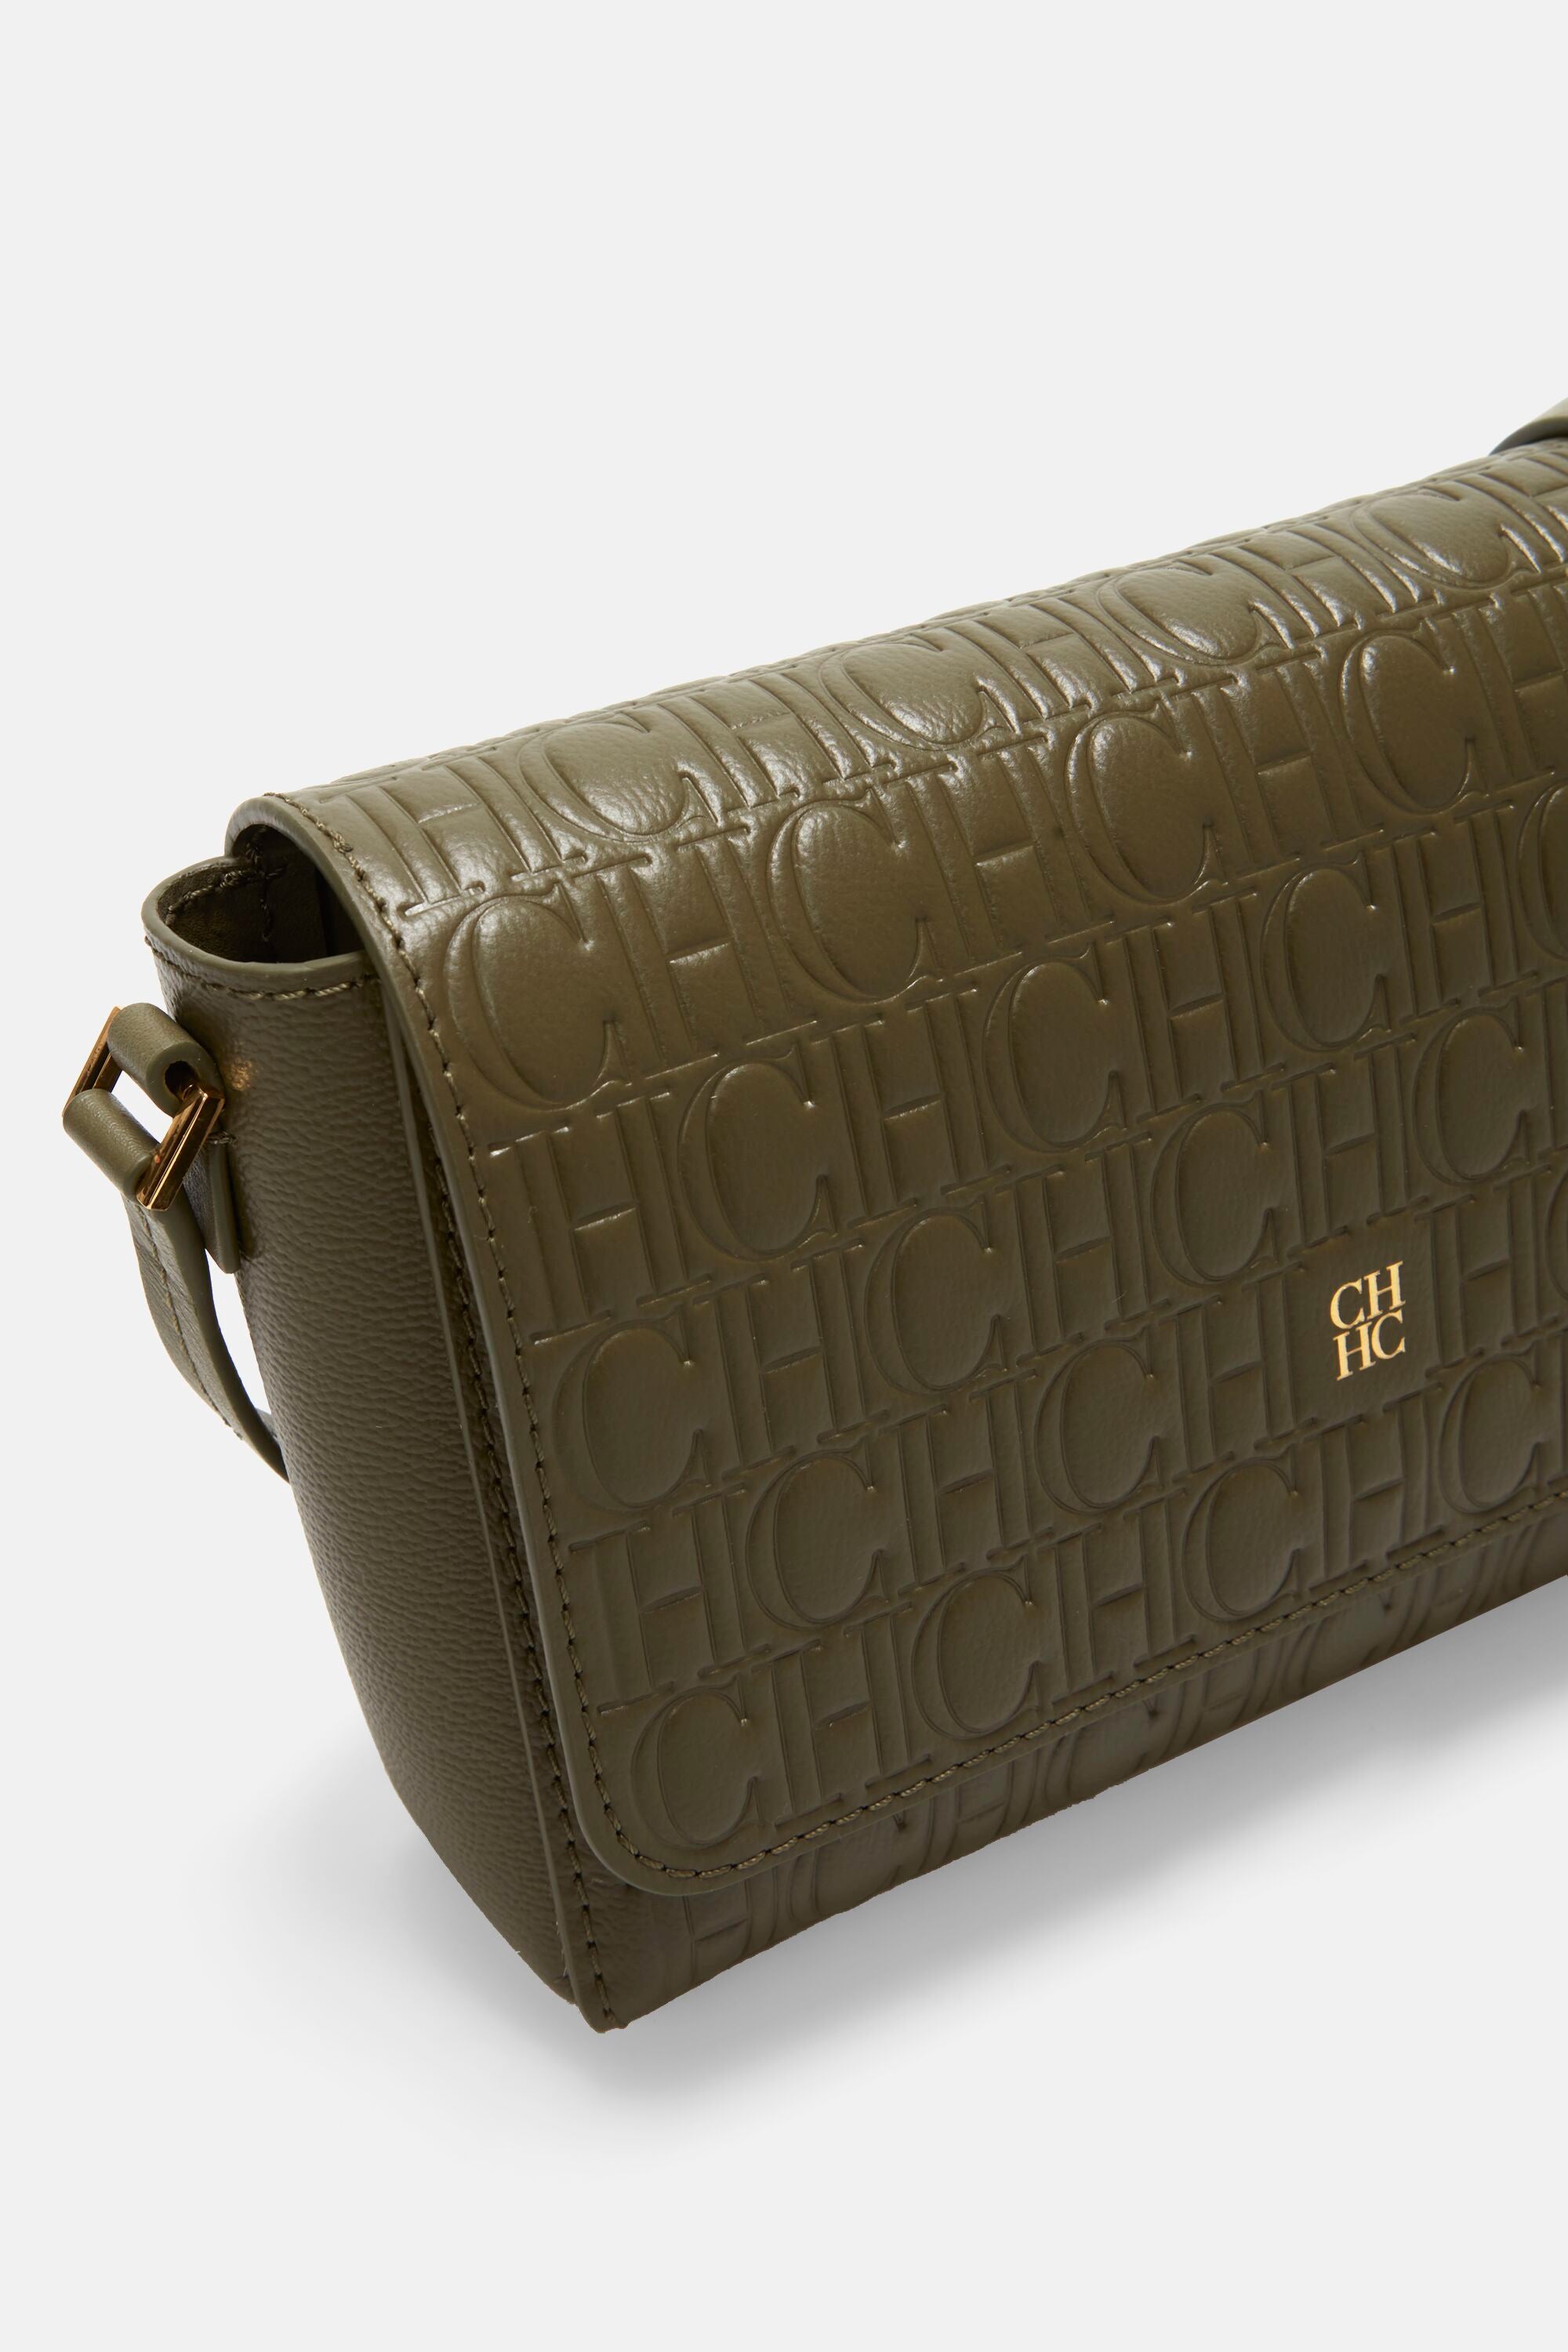 Authentic Carolina Herrera Brown Quilted Leather Crossbody Handbags